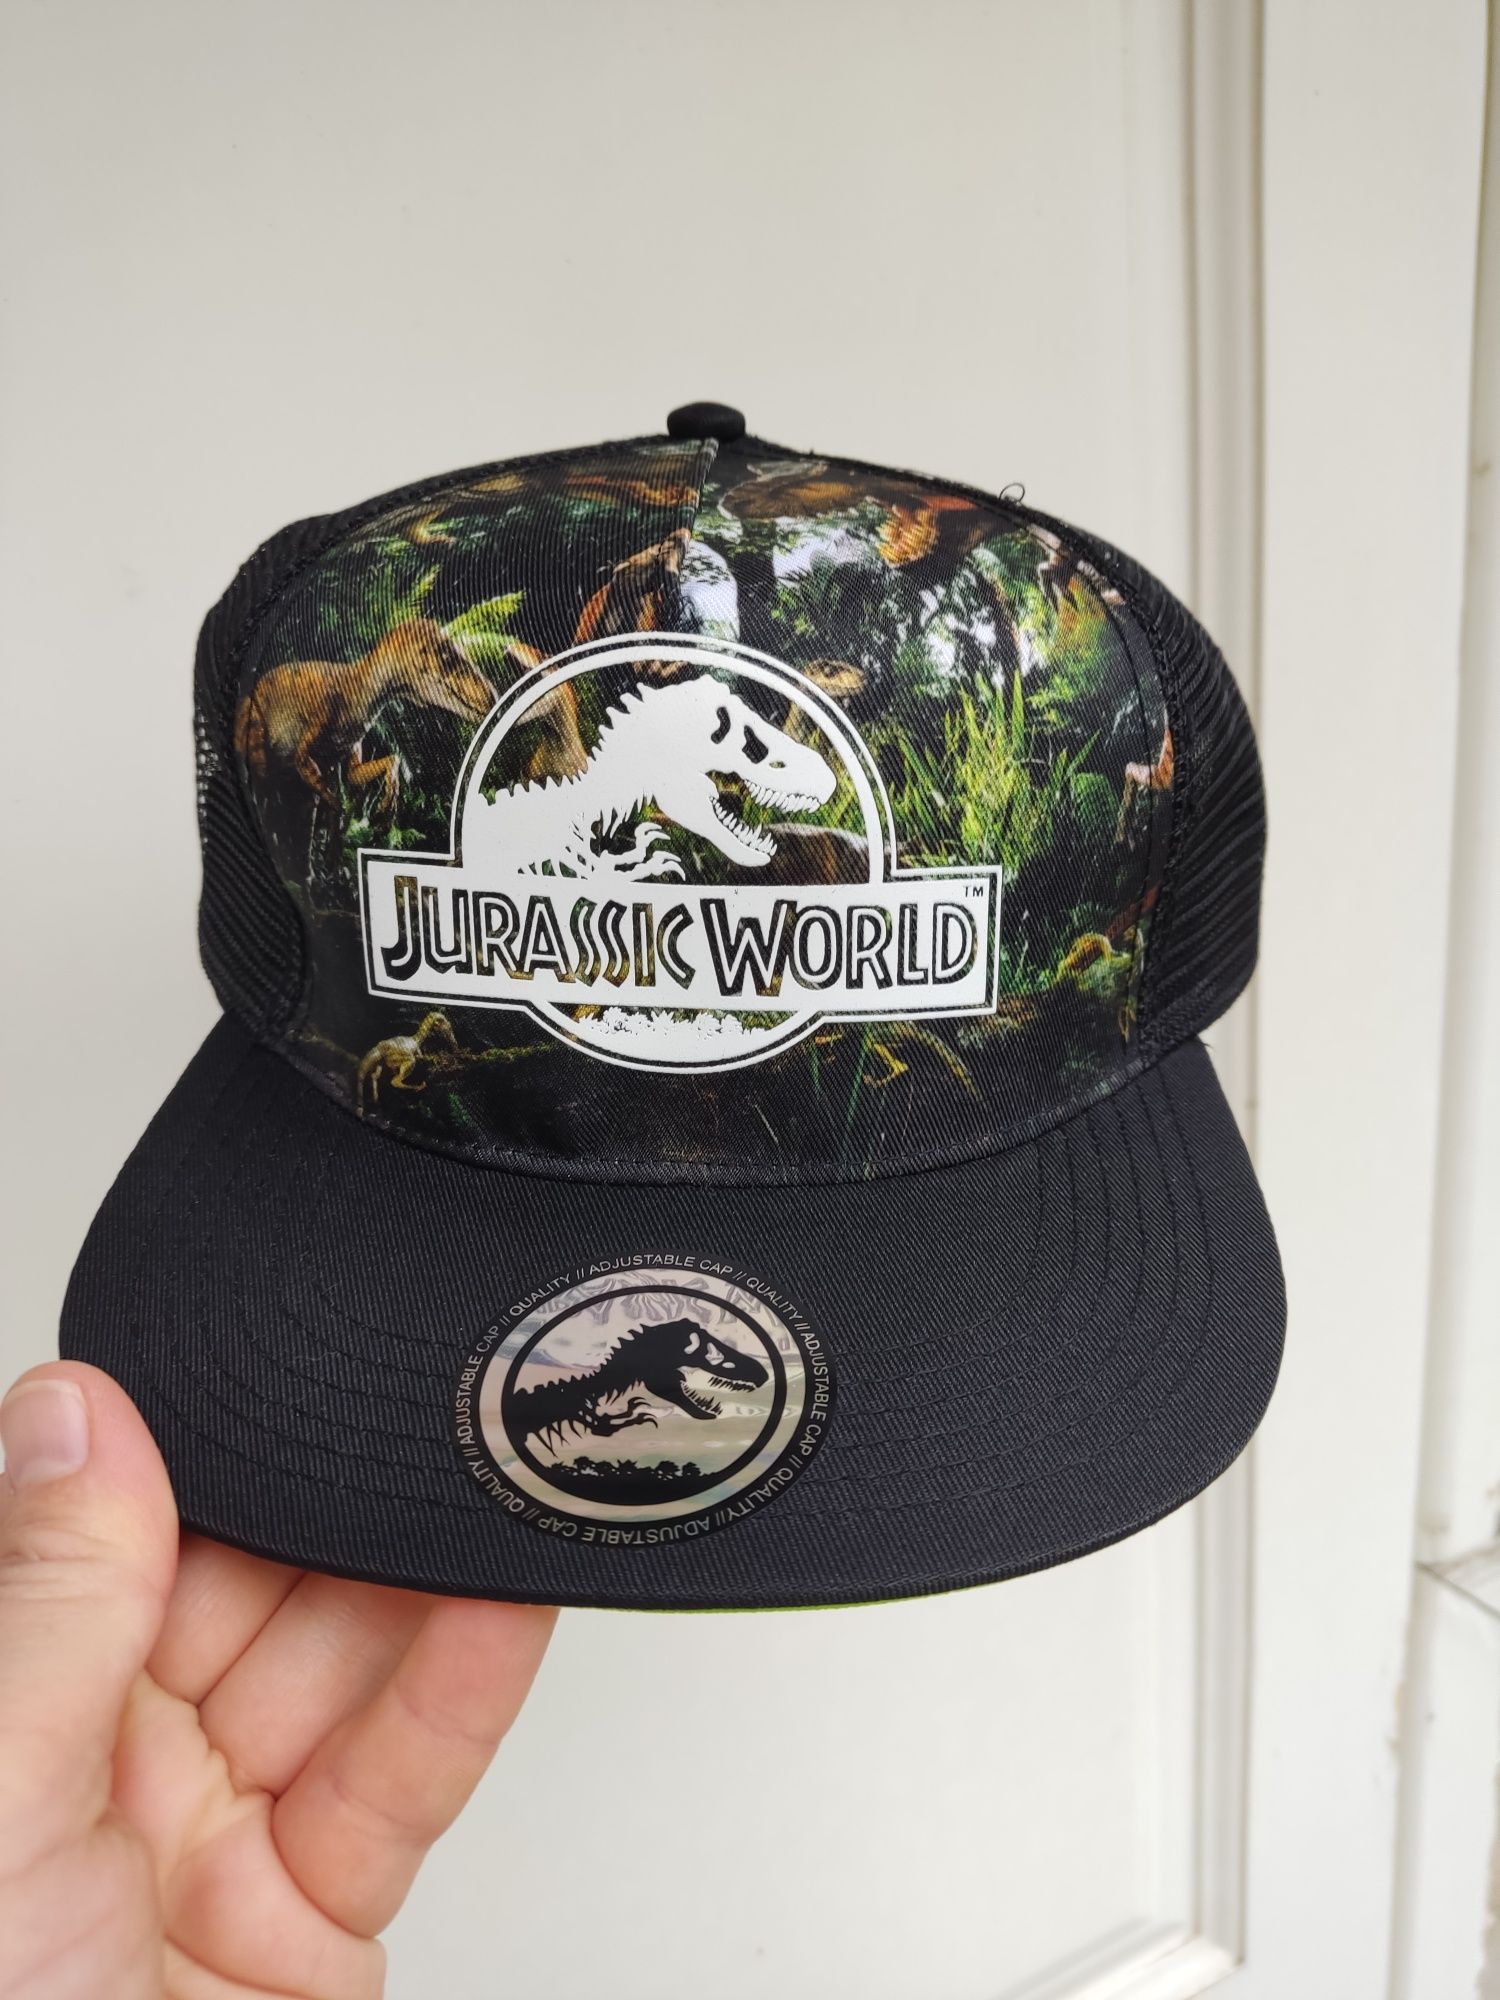 Стильная кепка для мальчика H&M, Jurassic world, X-box 8-12л